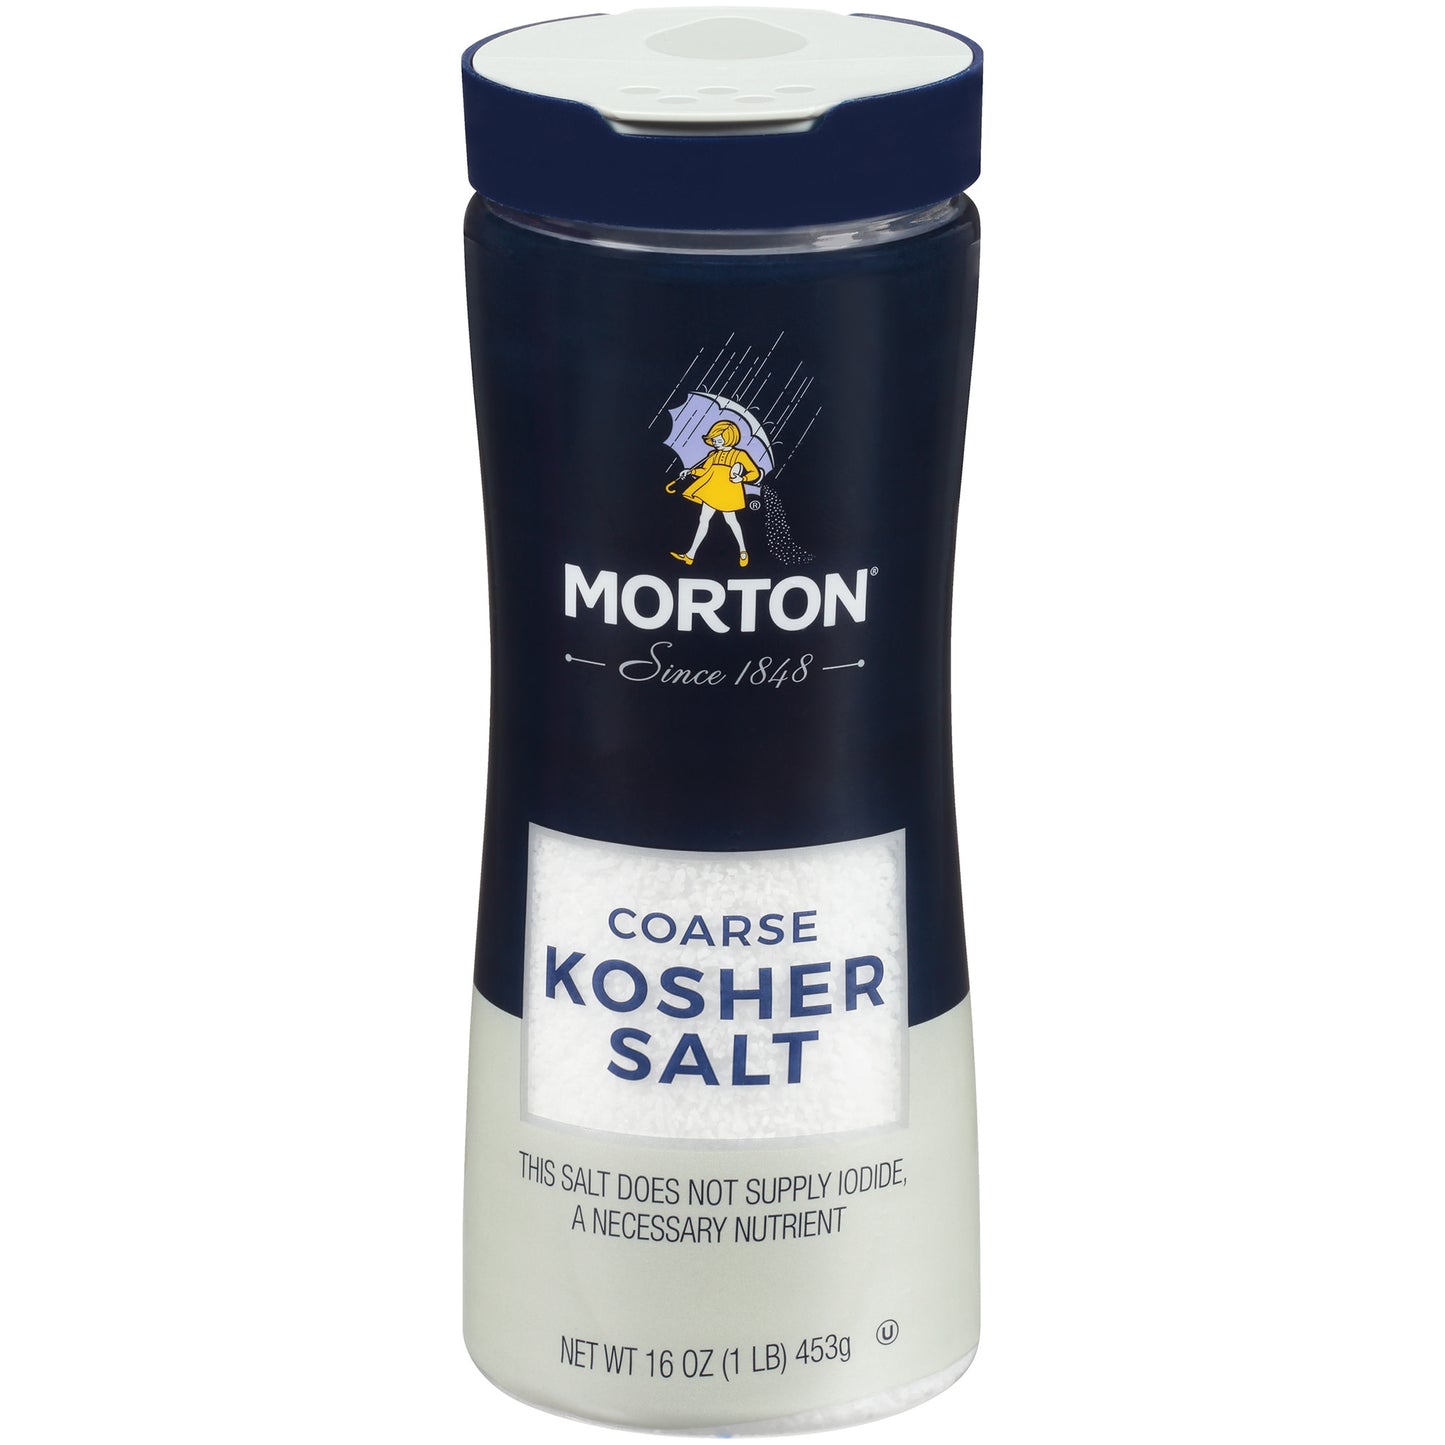 Morton Coarse Kosher Salt 16oz Shaker